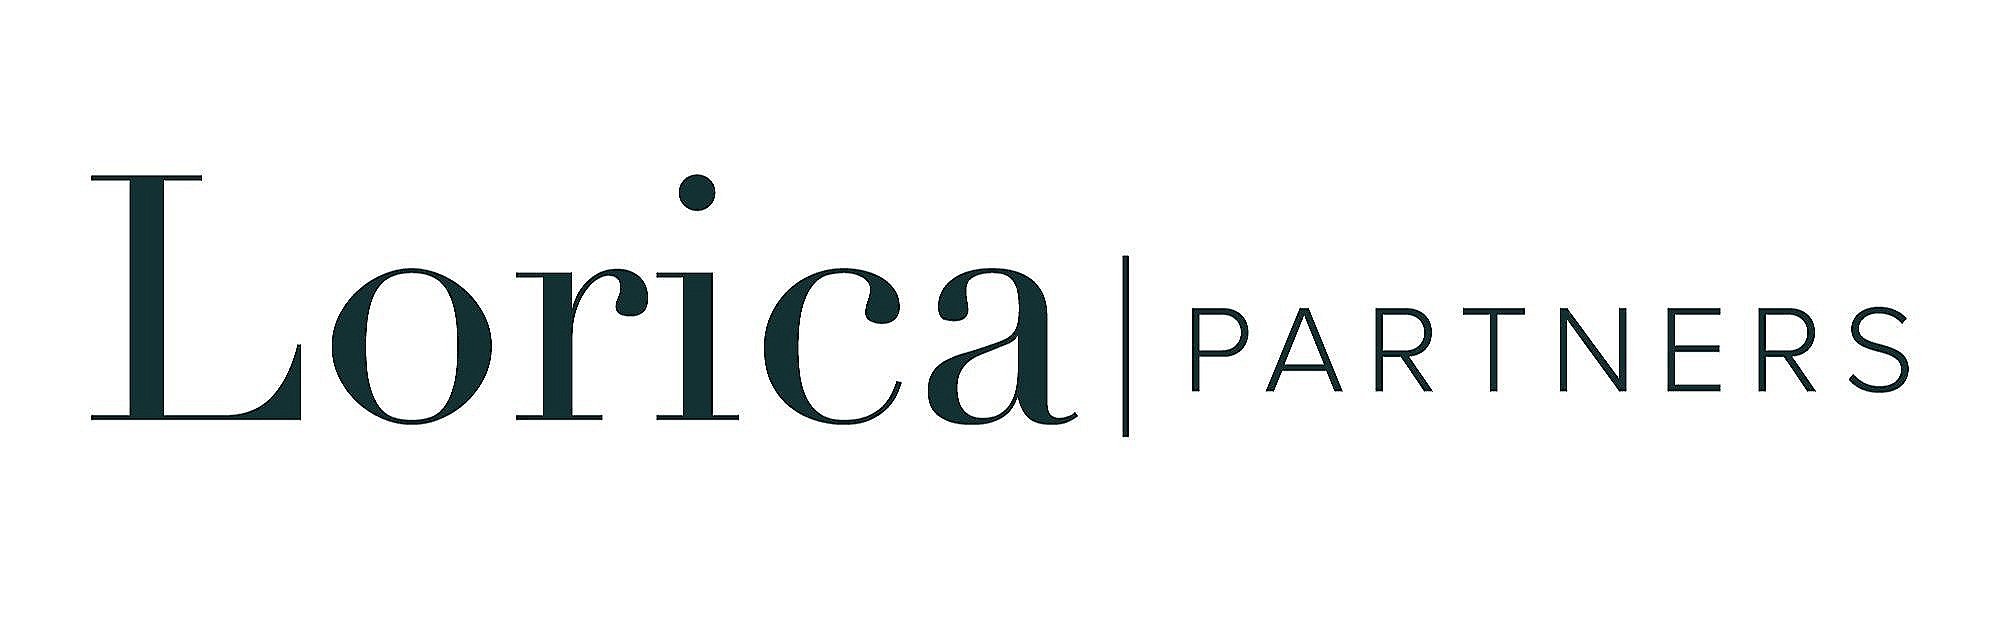 Lorica Partners